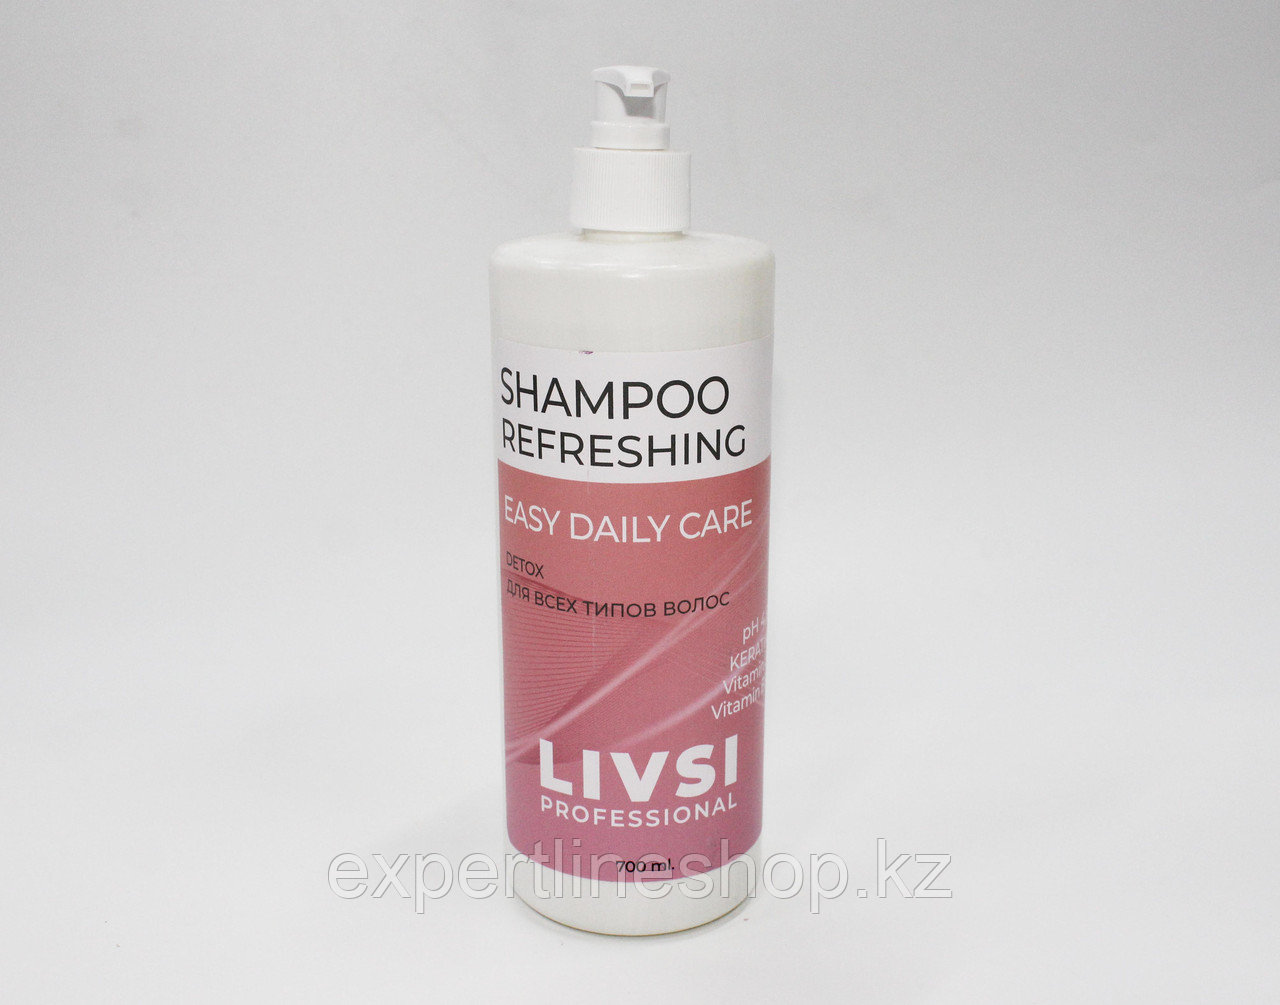 Shampoo EASY DAILY CARE шампунь для ежедневного ухода 700 мл LIVSI